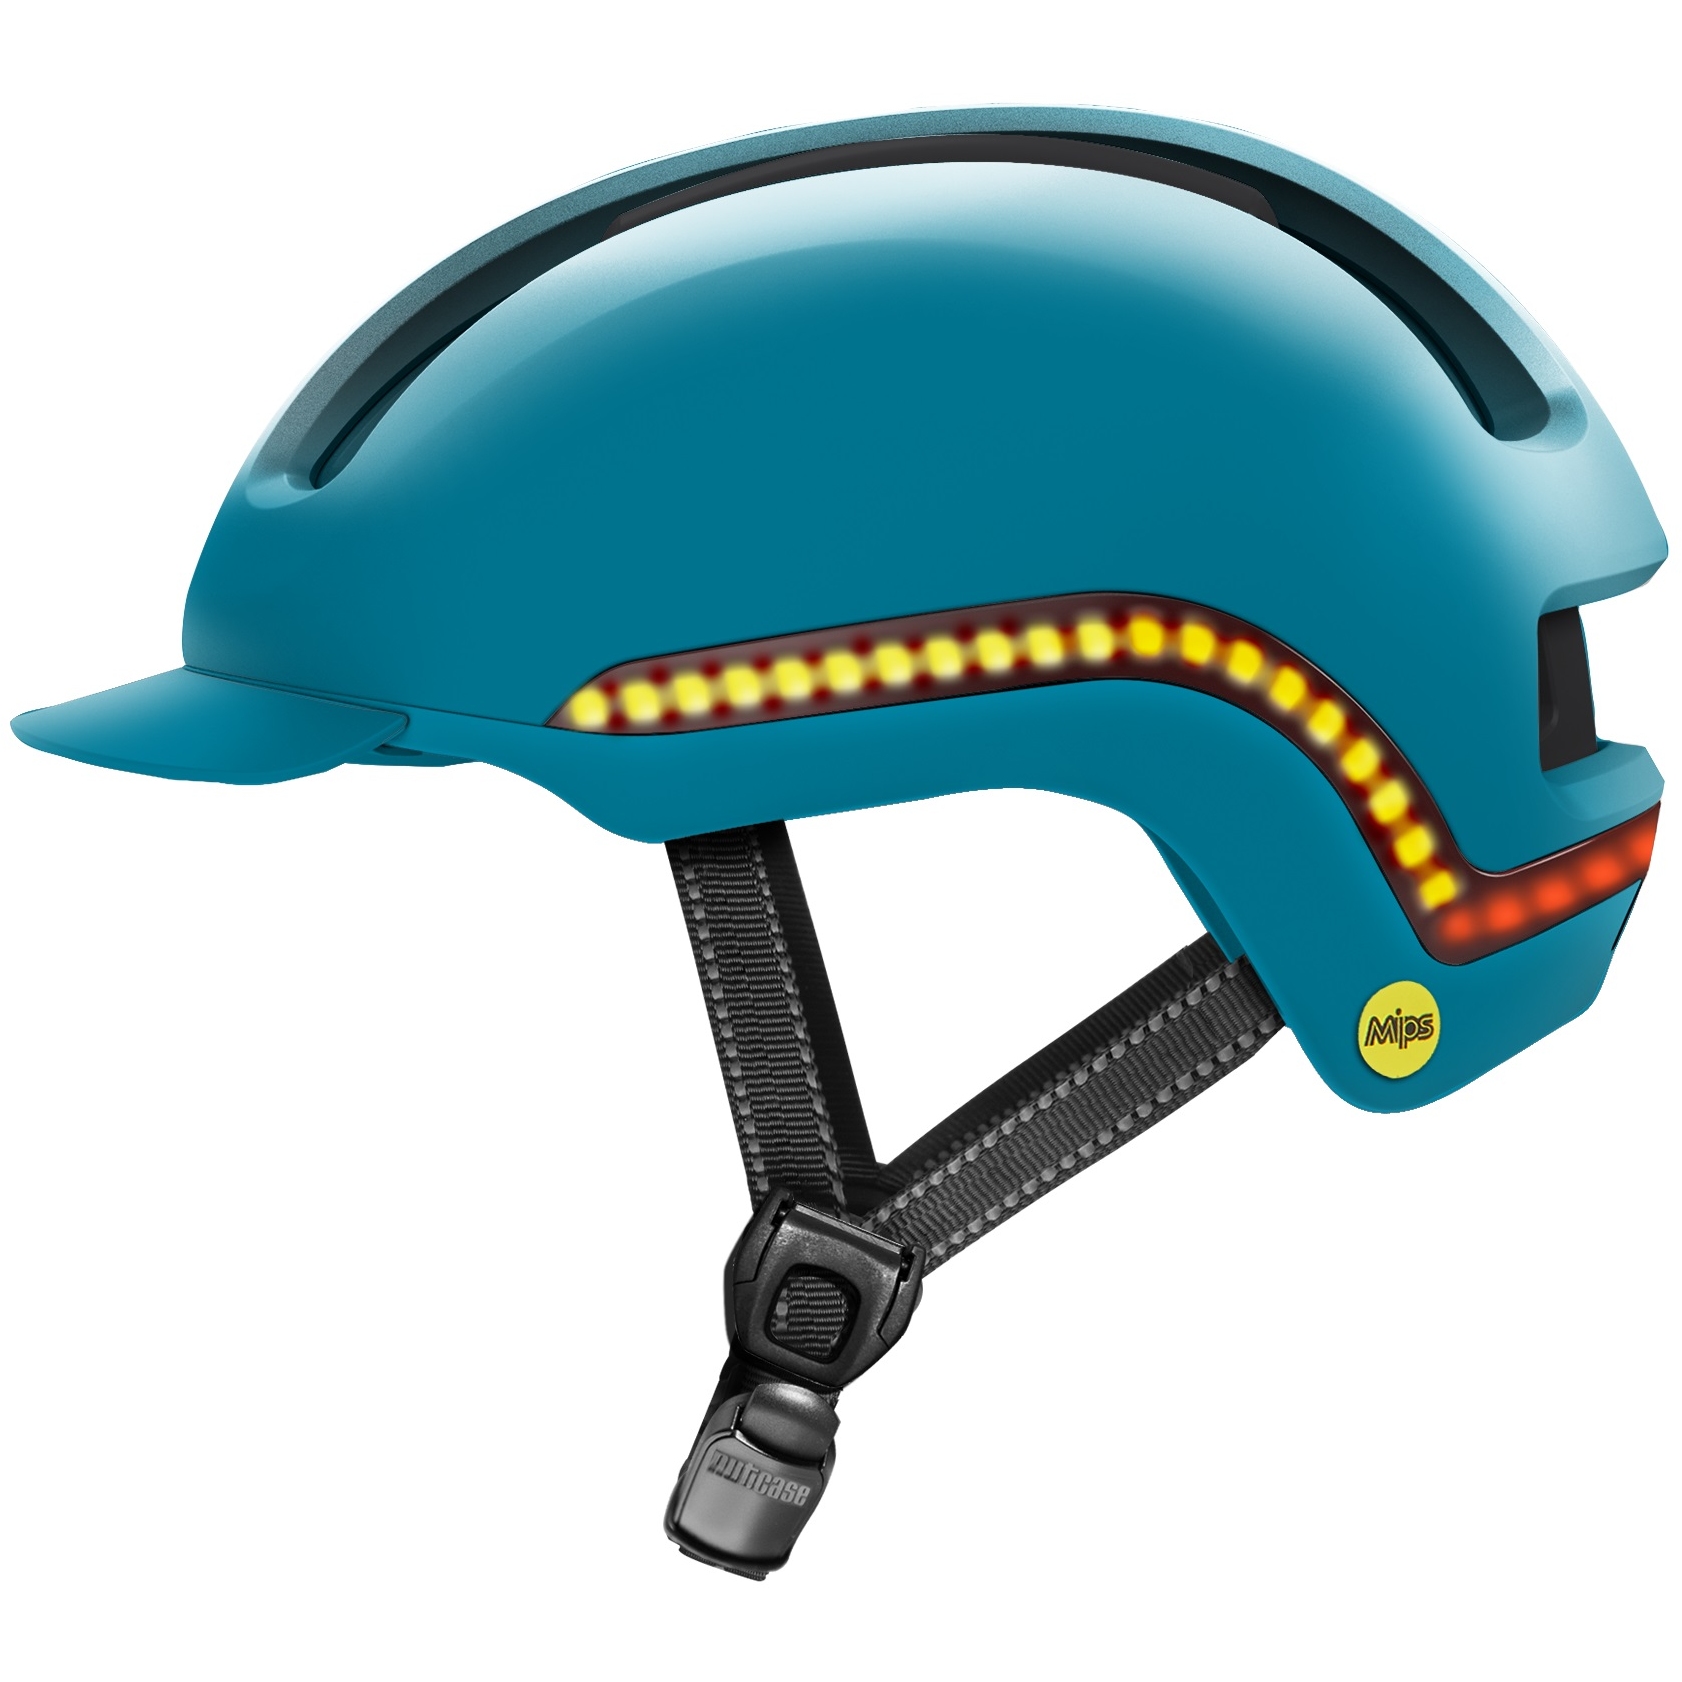 Productfoto van Nutcase Vio Commute MIPS LED Helmet - Maritime Matte